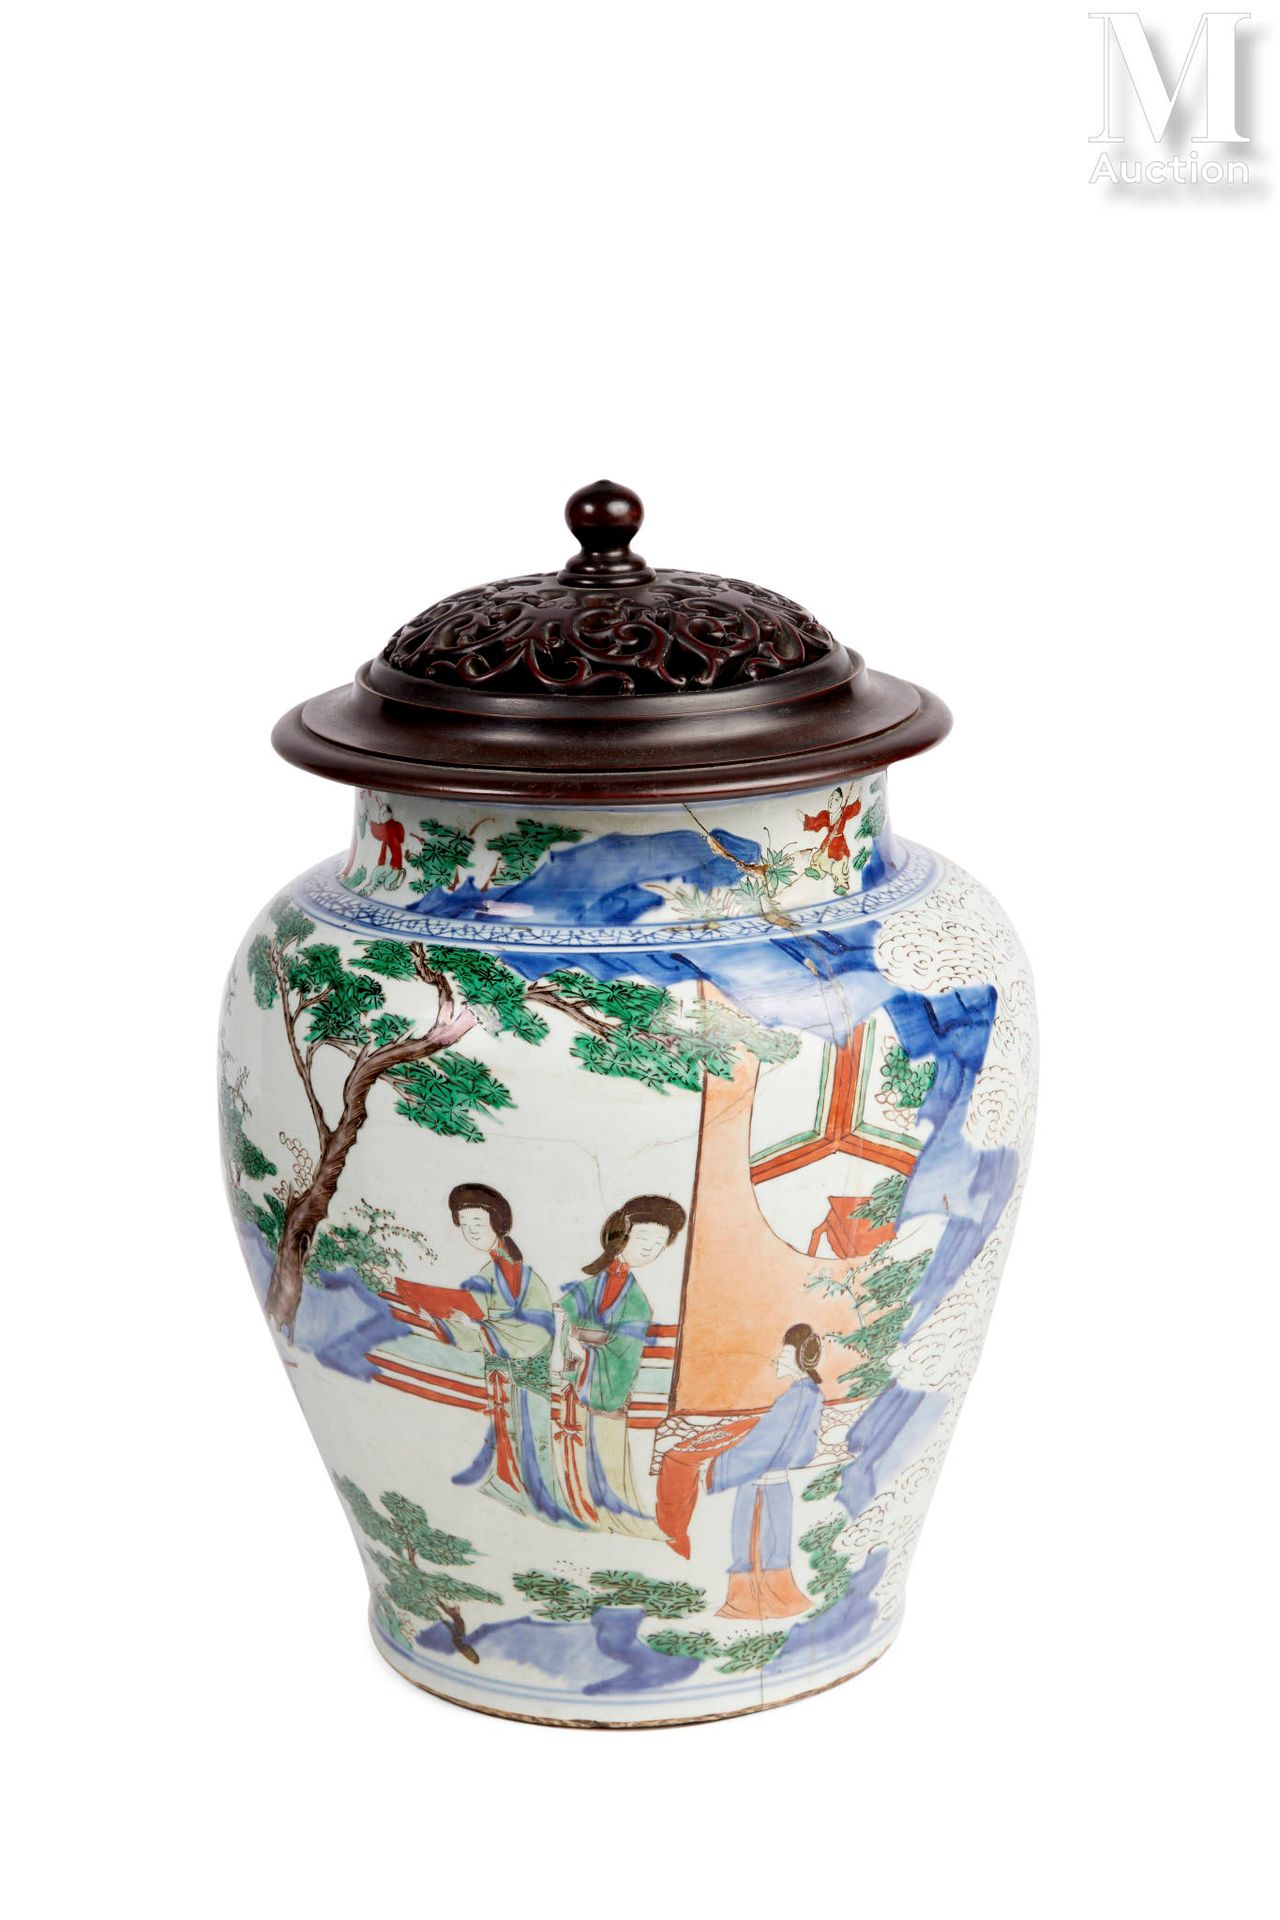 CHINE, Epoque Transition, XVIIe siècle 大瓷器花瓶

弧形底座，隆起的肩部，以五彩珐琅彩装饰花园中的几位优雅的女士，颈部有&hellip;